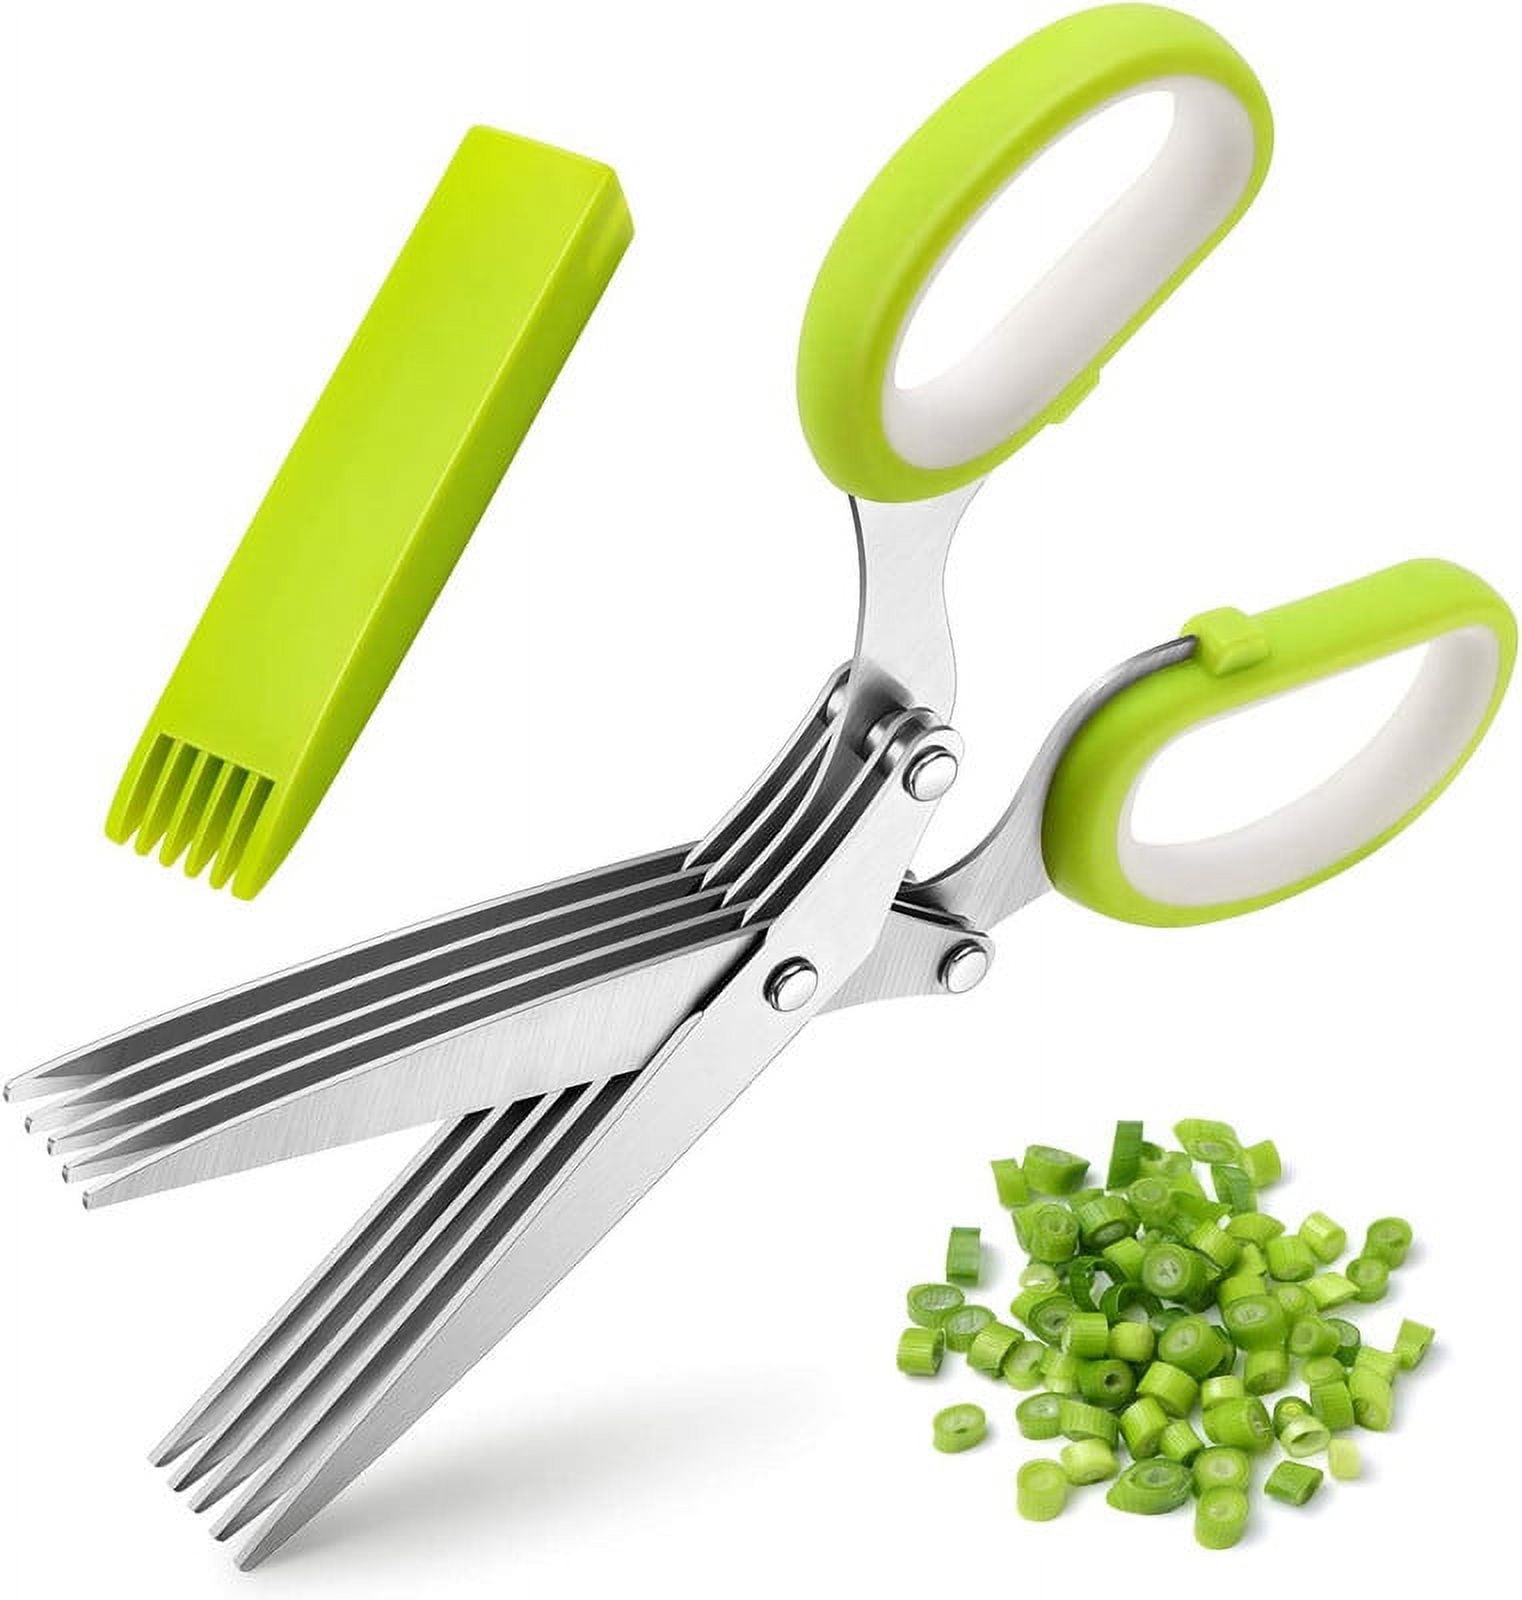 Herb scissors – The Modest Home